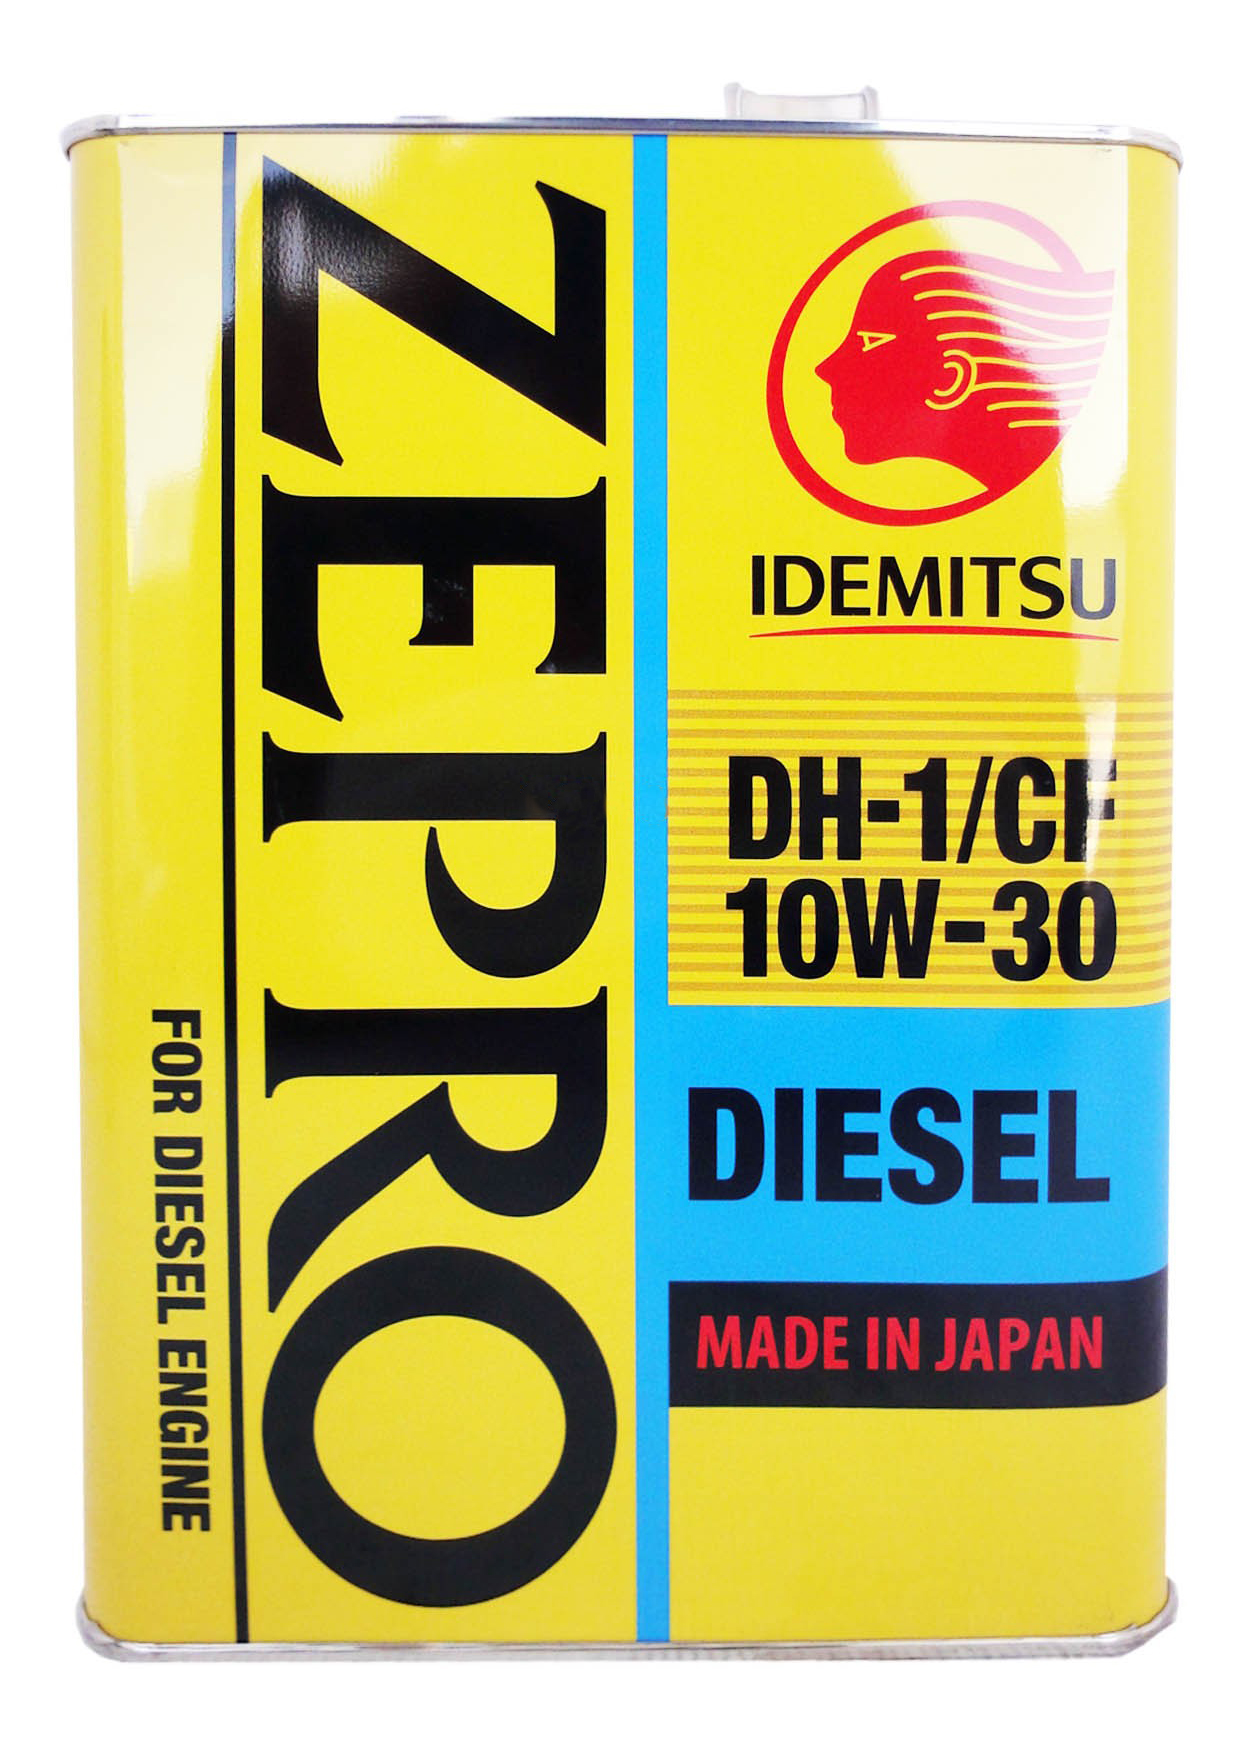 фото Idemitsu масло idemitsu 10/30 zepro diesel dh-1/cf 4л